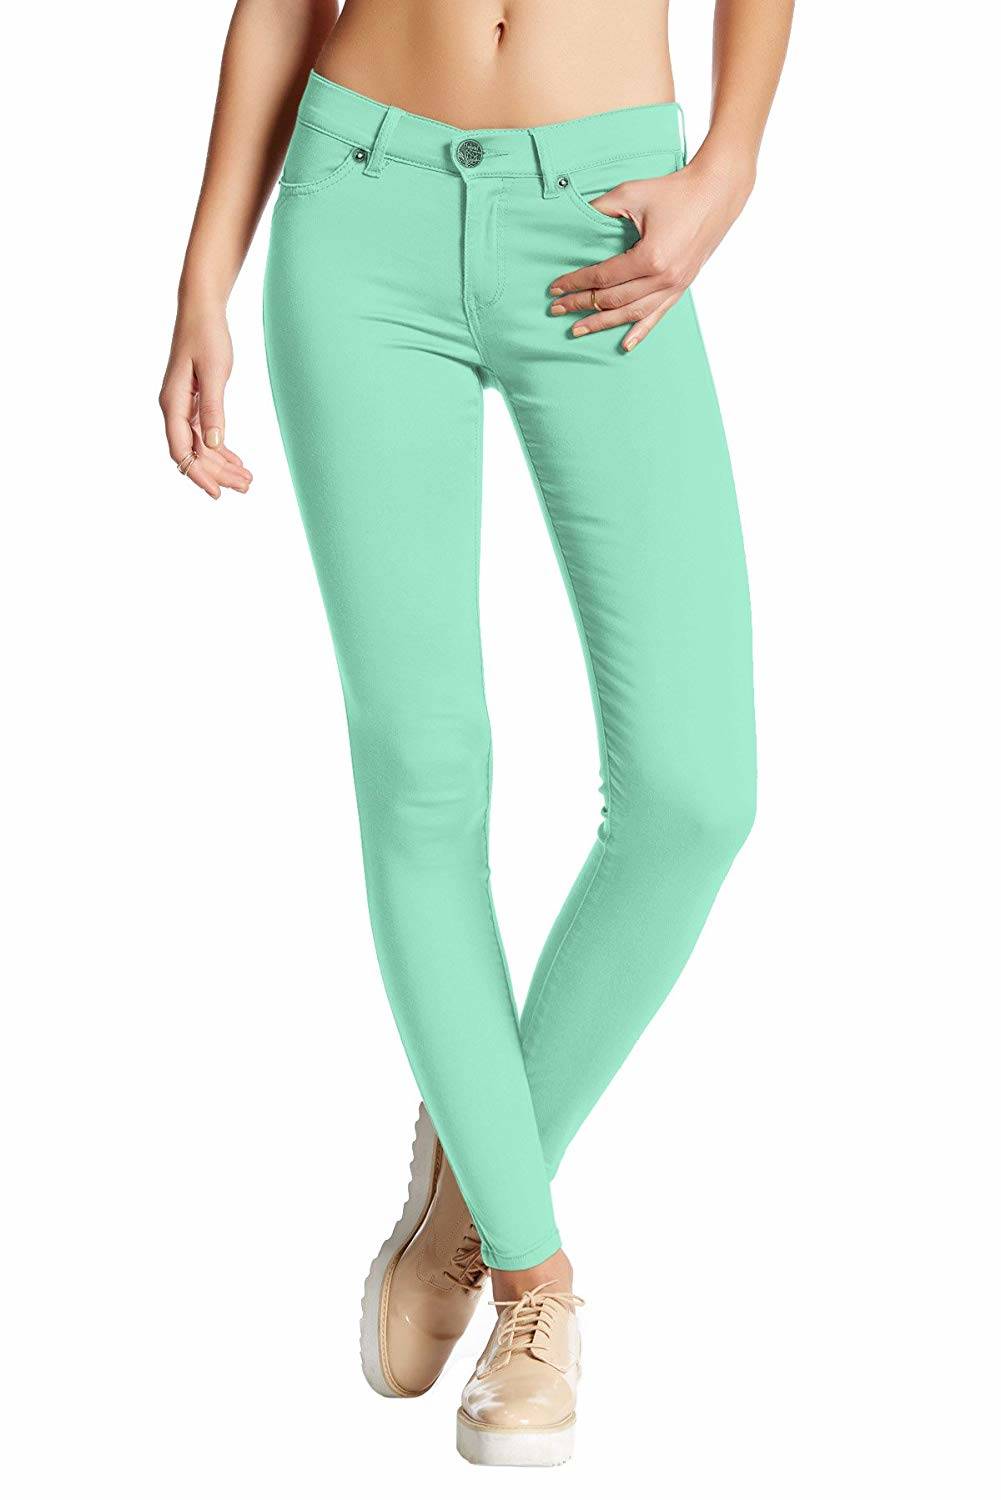 mint green pants